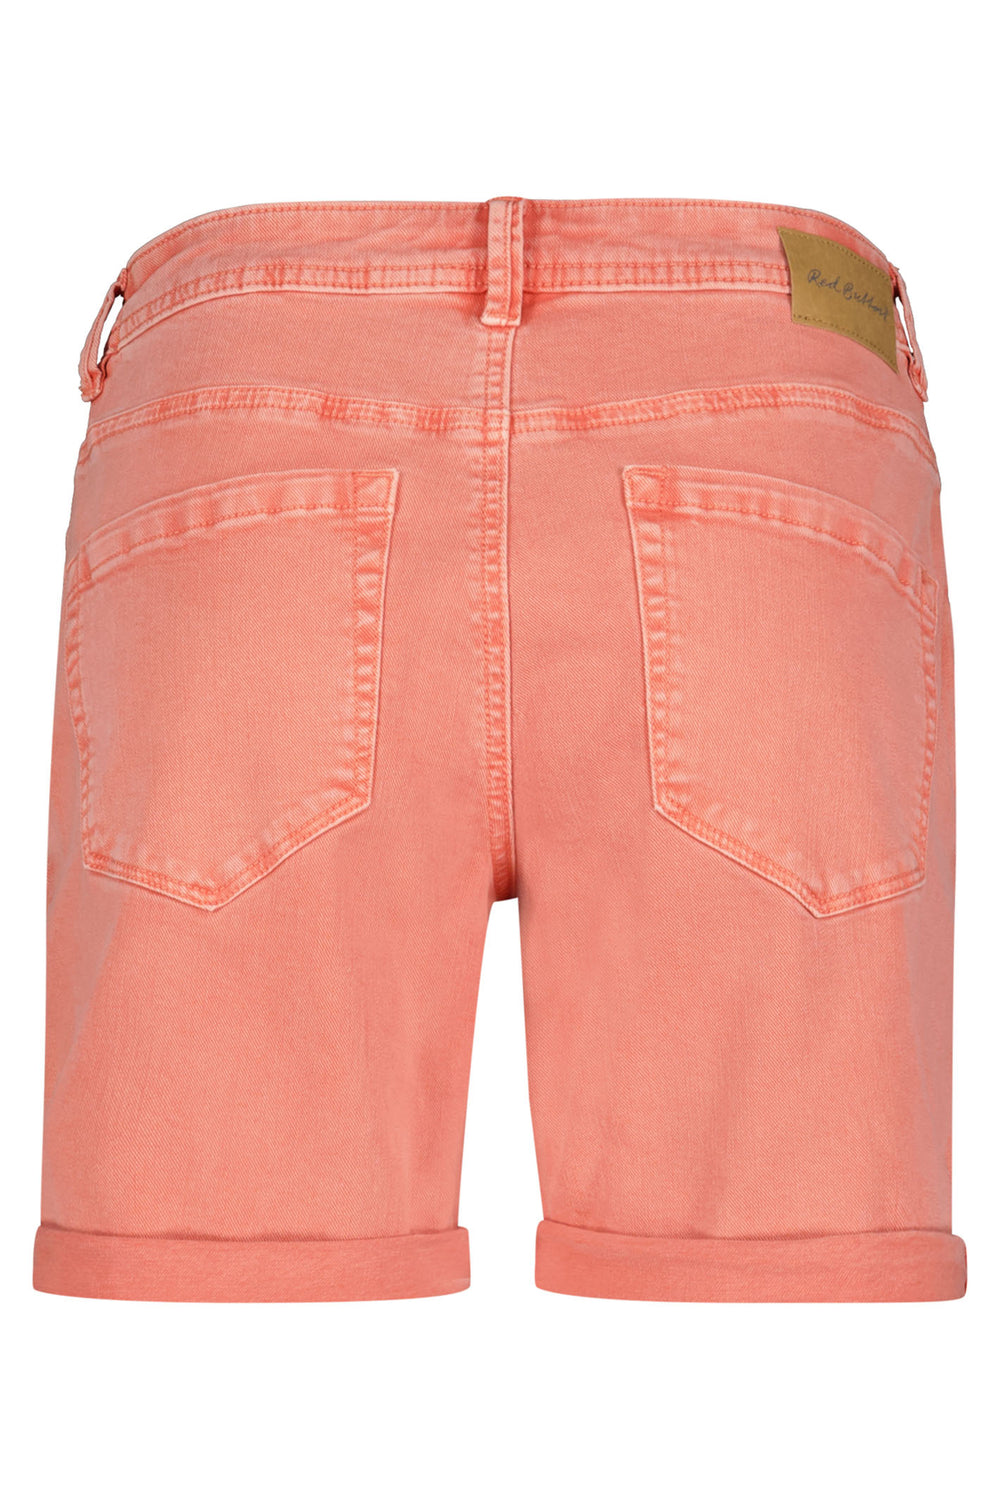 Red Button SRB4229 Bibette Flamingo Pink Denim Shorts - Olivia Grace Fashion